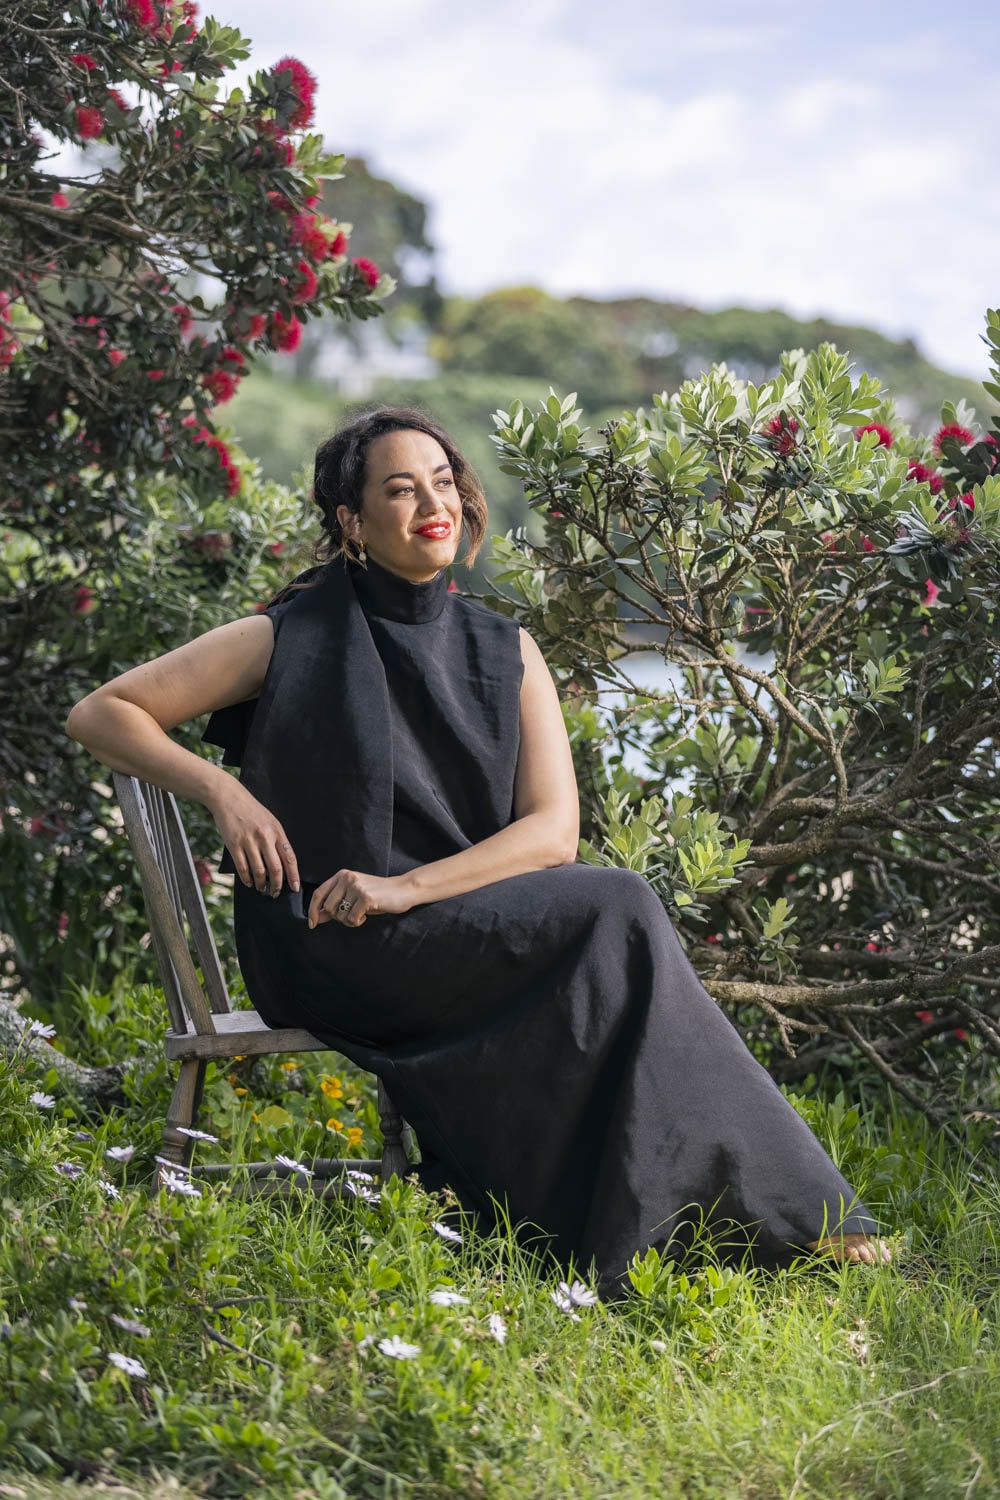 Kanoa Lloyd wearing black dress sitting by trees